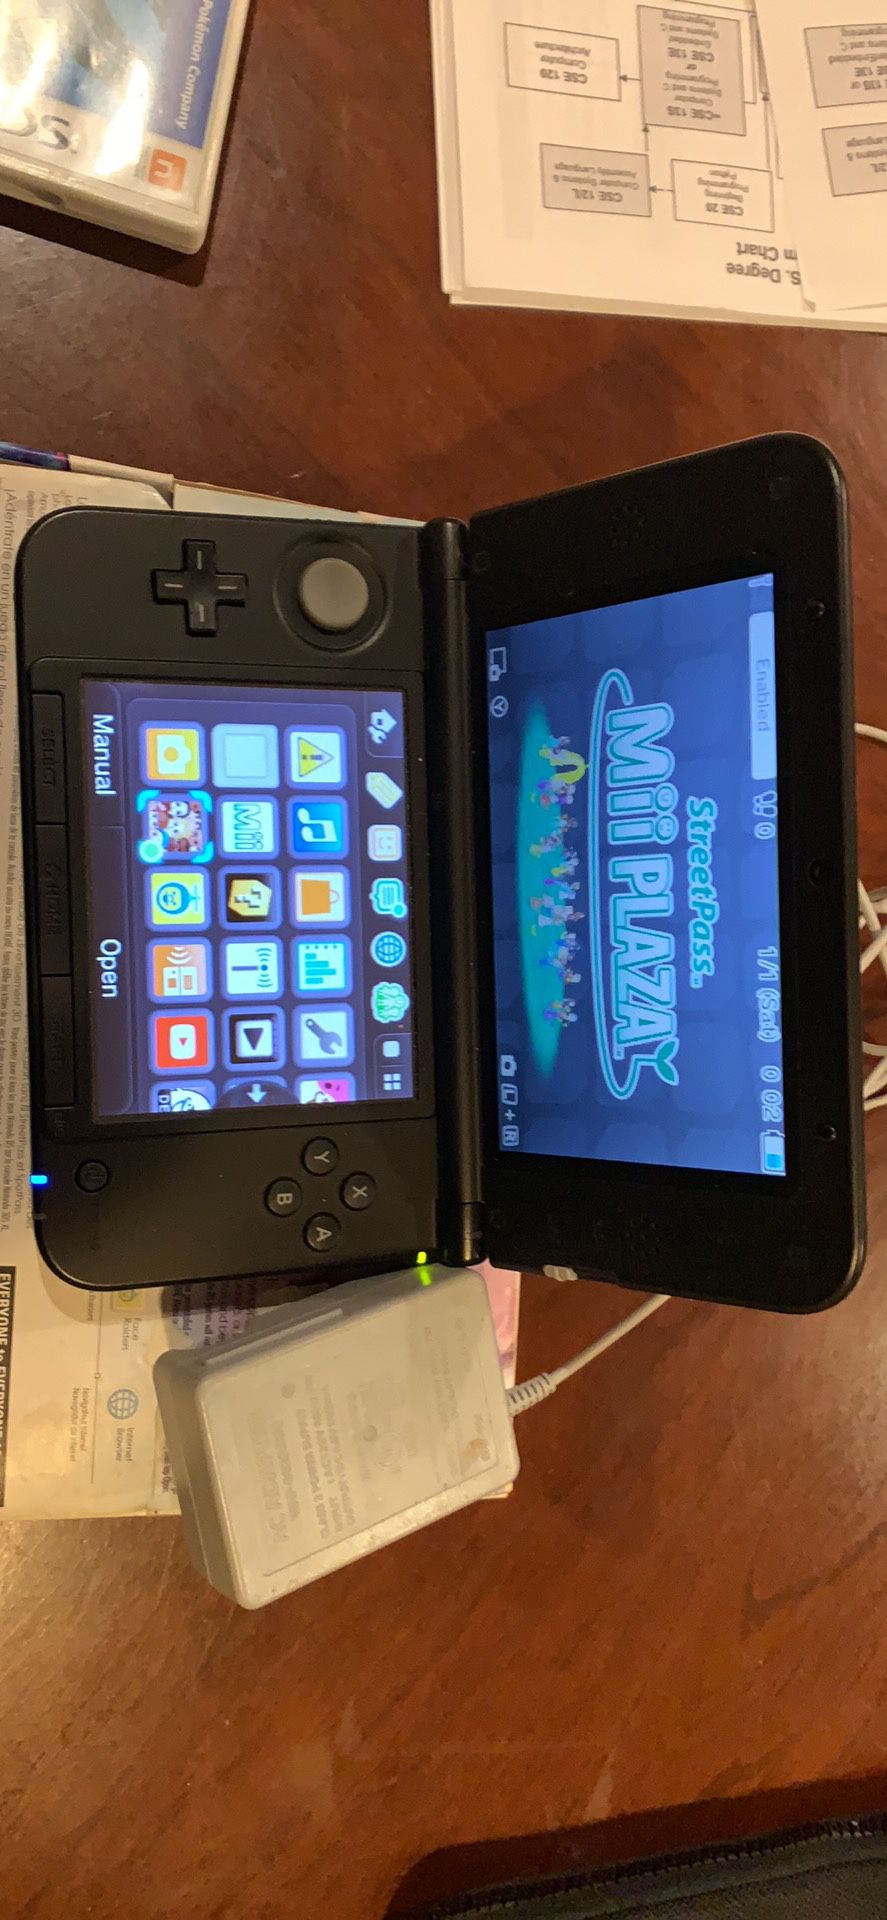 Nintendo 3DS XL with preinstalled Mario & Luigi Dream team game and includes 4G SD card